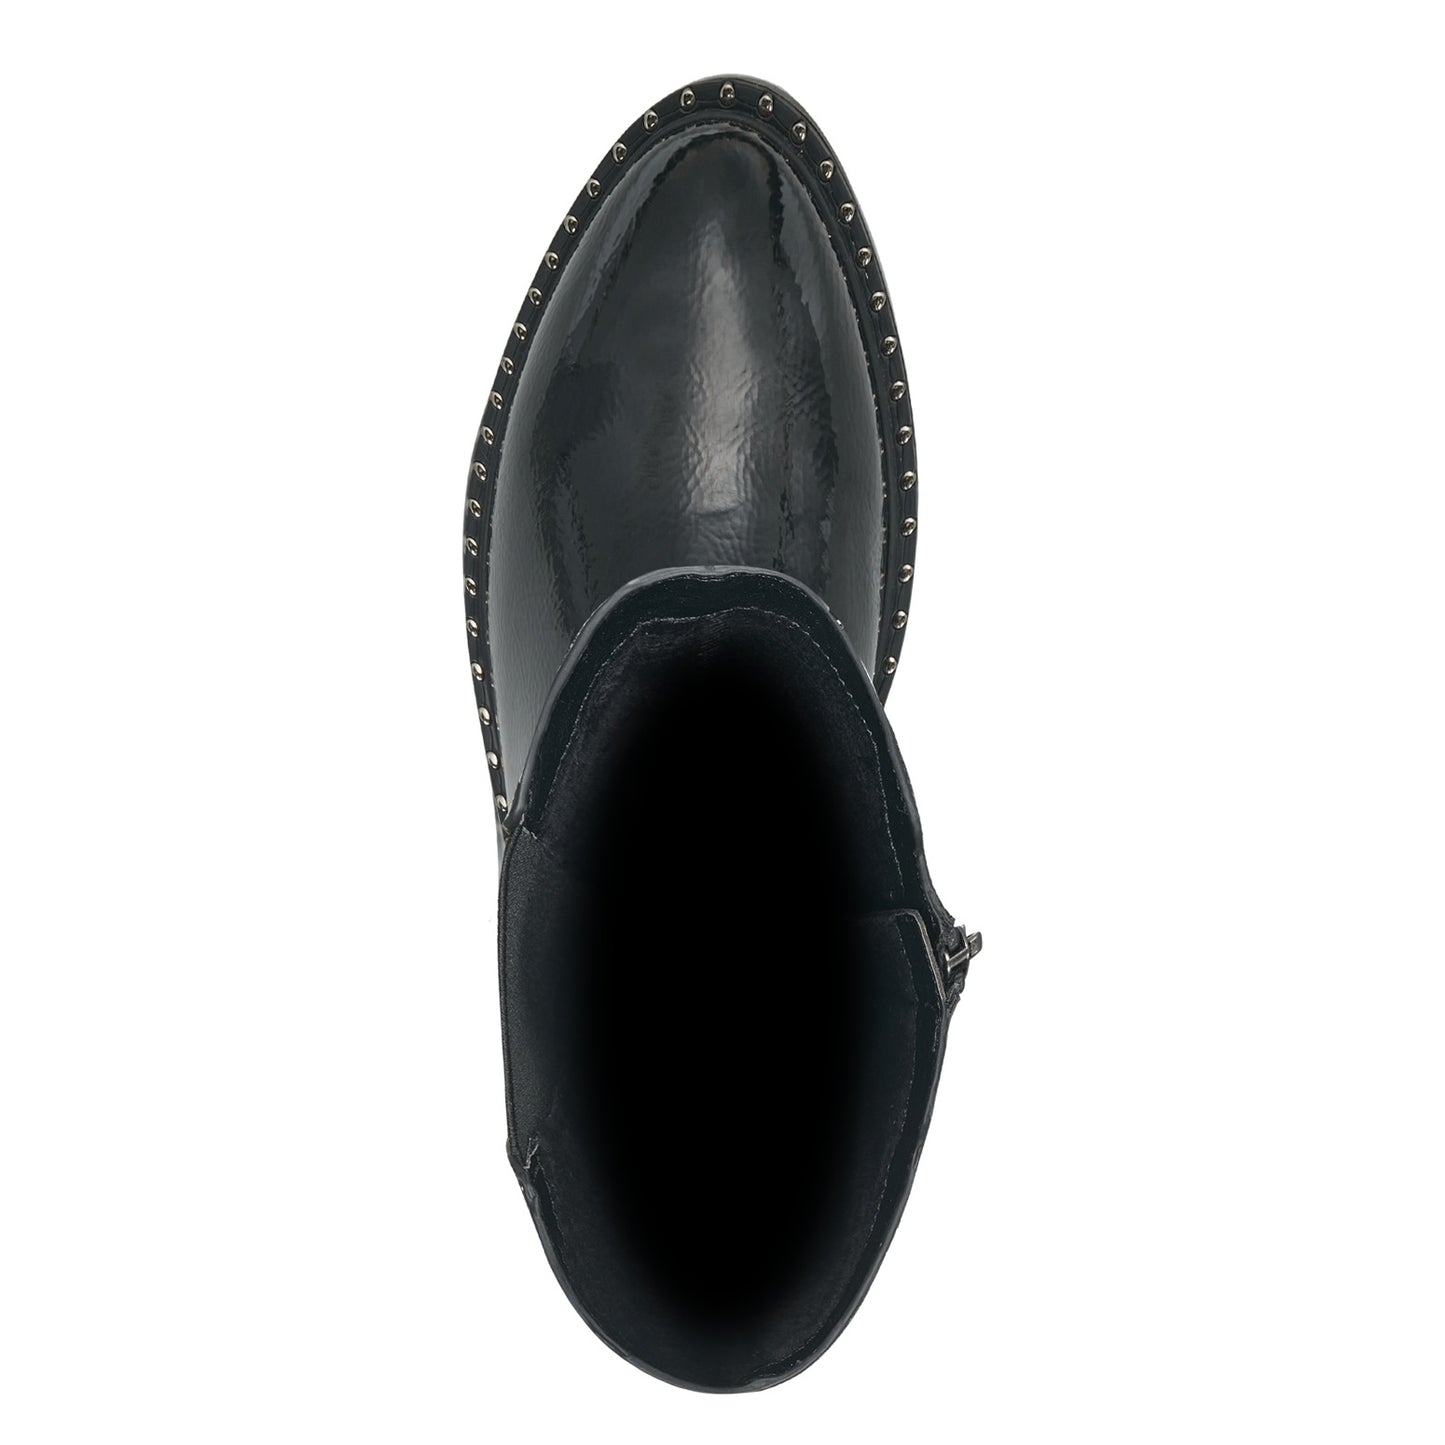 Tamaris 1-25518-41 018 Black Patent Boots